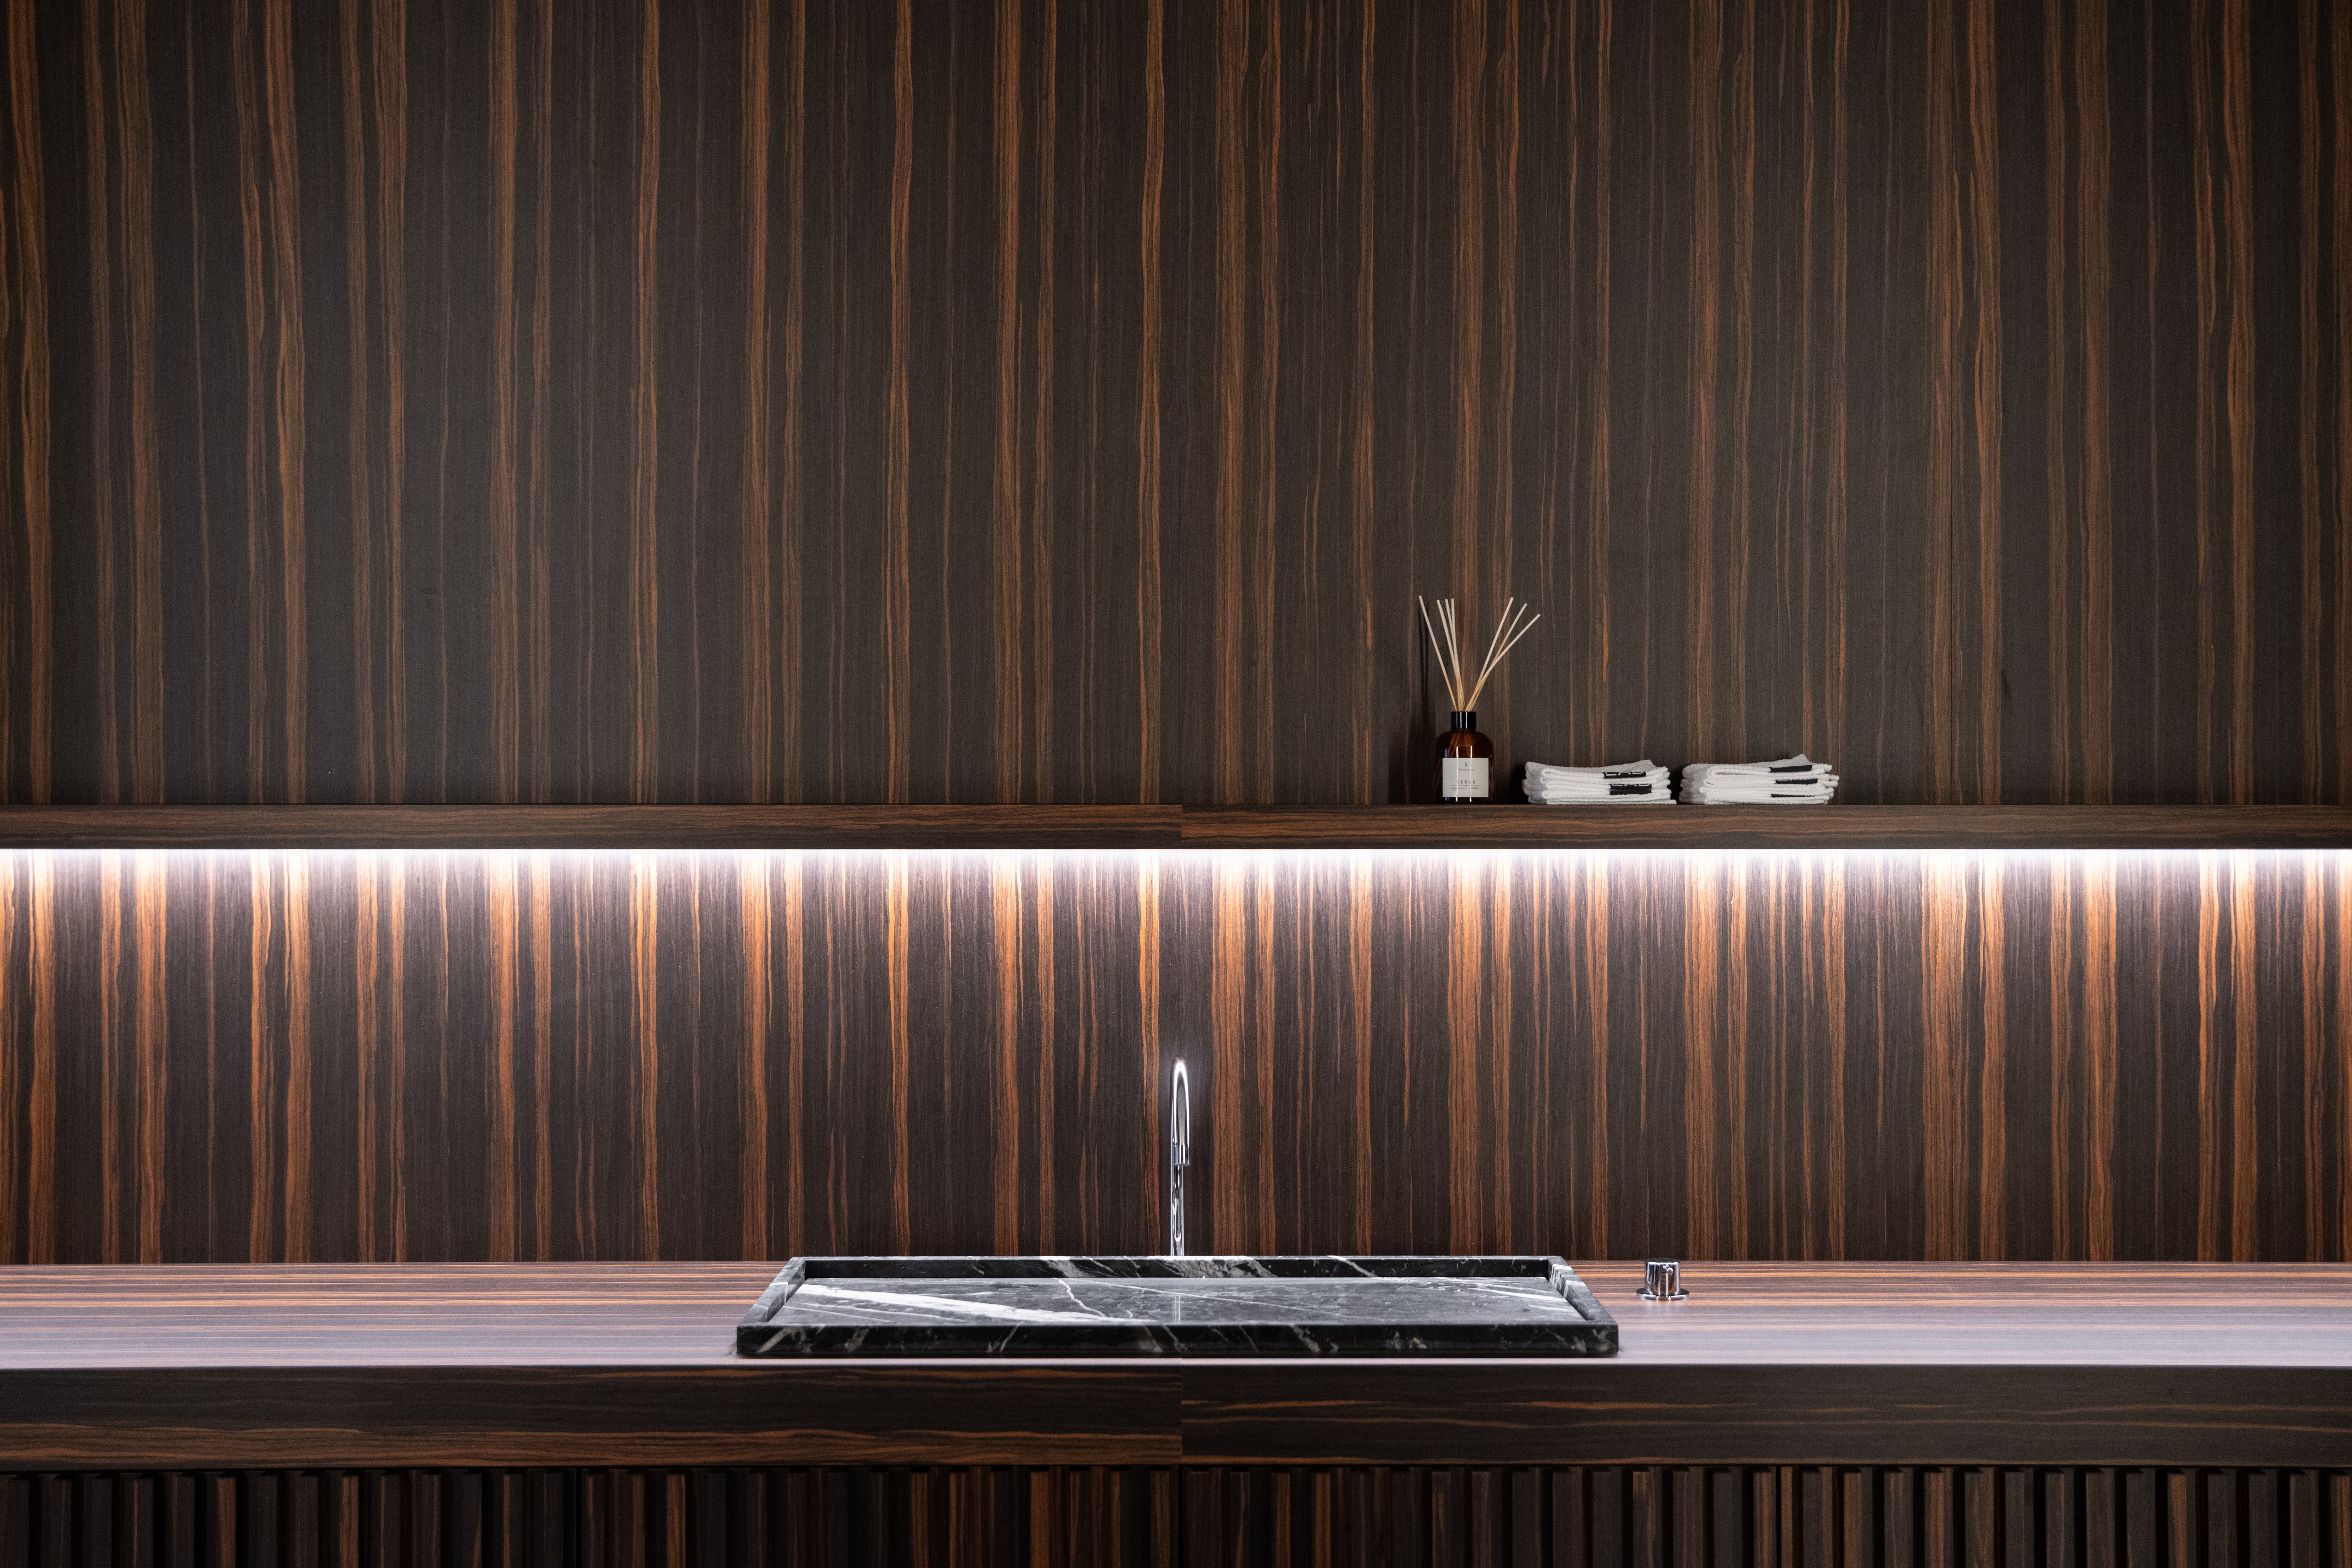 Decospan wood wall - wood panels decospan - wood wall behind sink - infinite wood corvus ebony